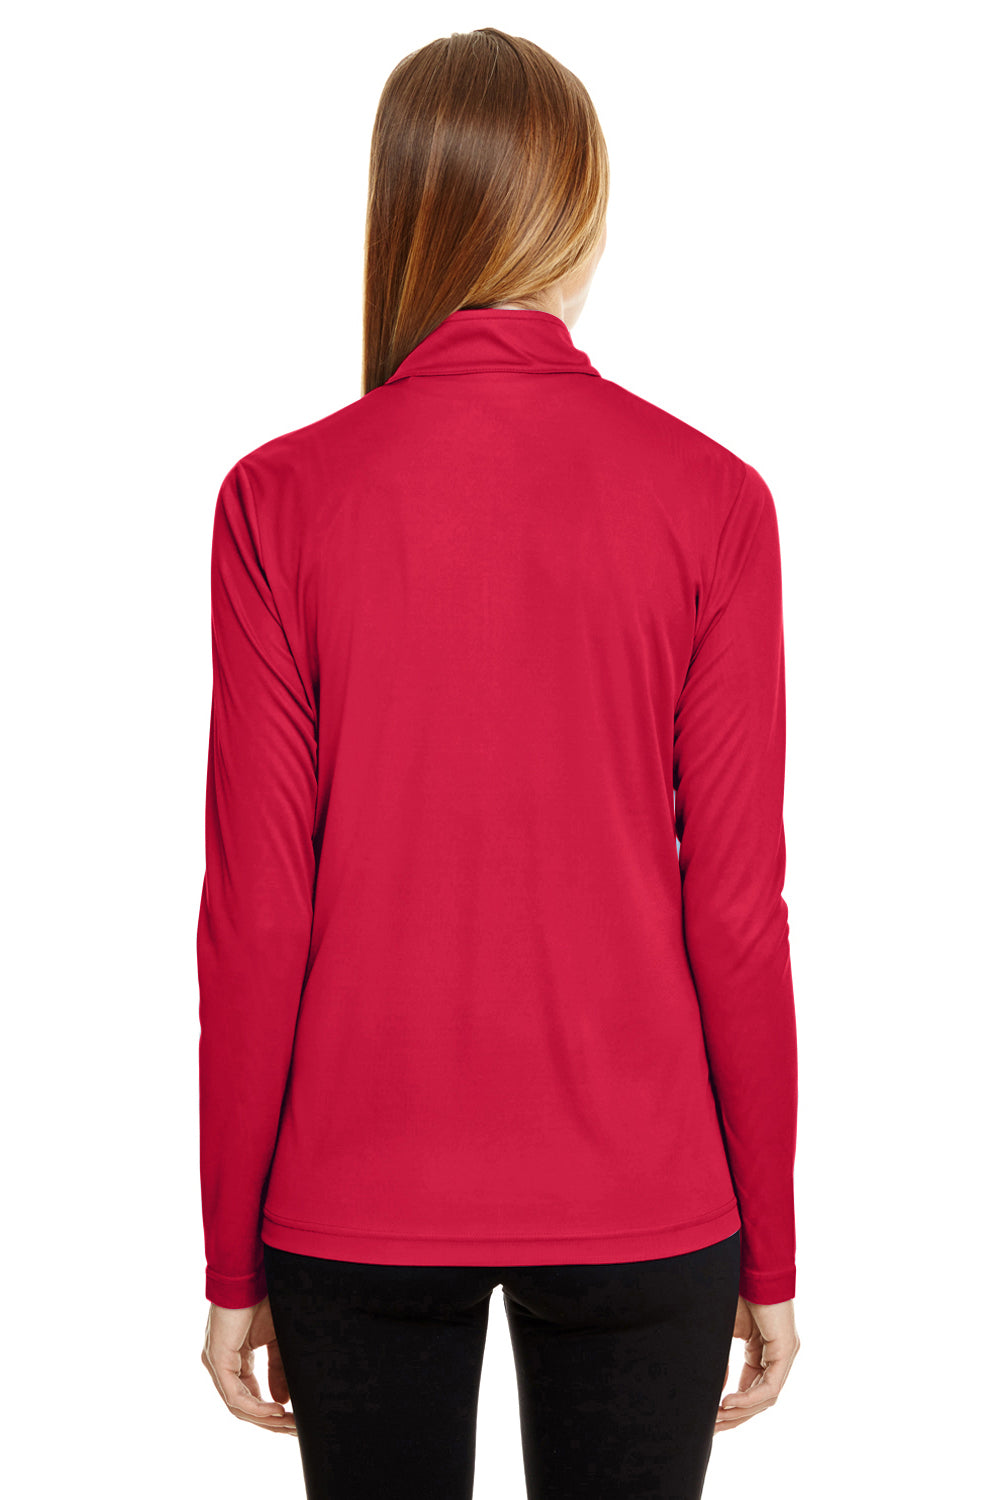 Team 365 TT31W Womens Zone Performance Moisture Wicking 1/4 Zip Sweatshirt Red Back